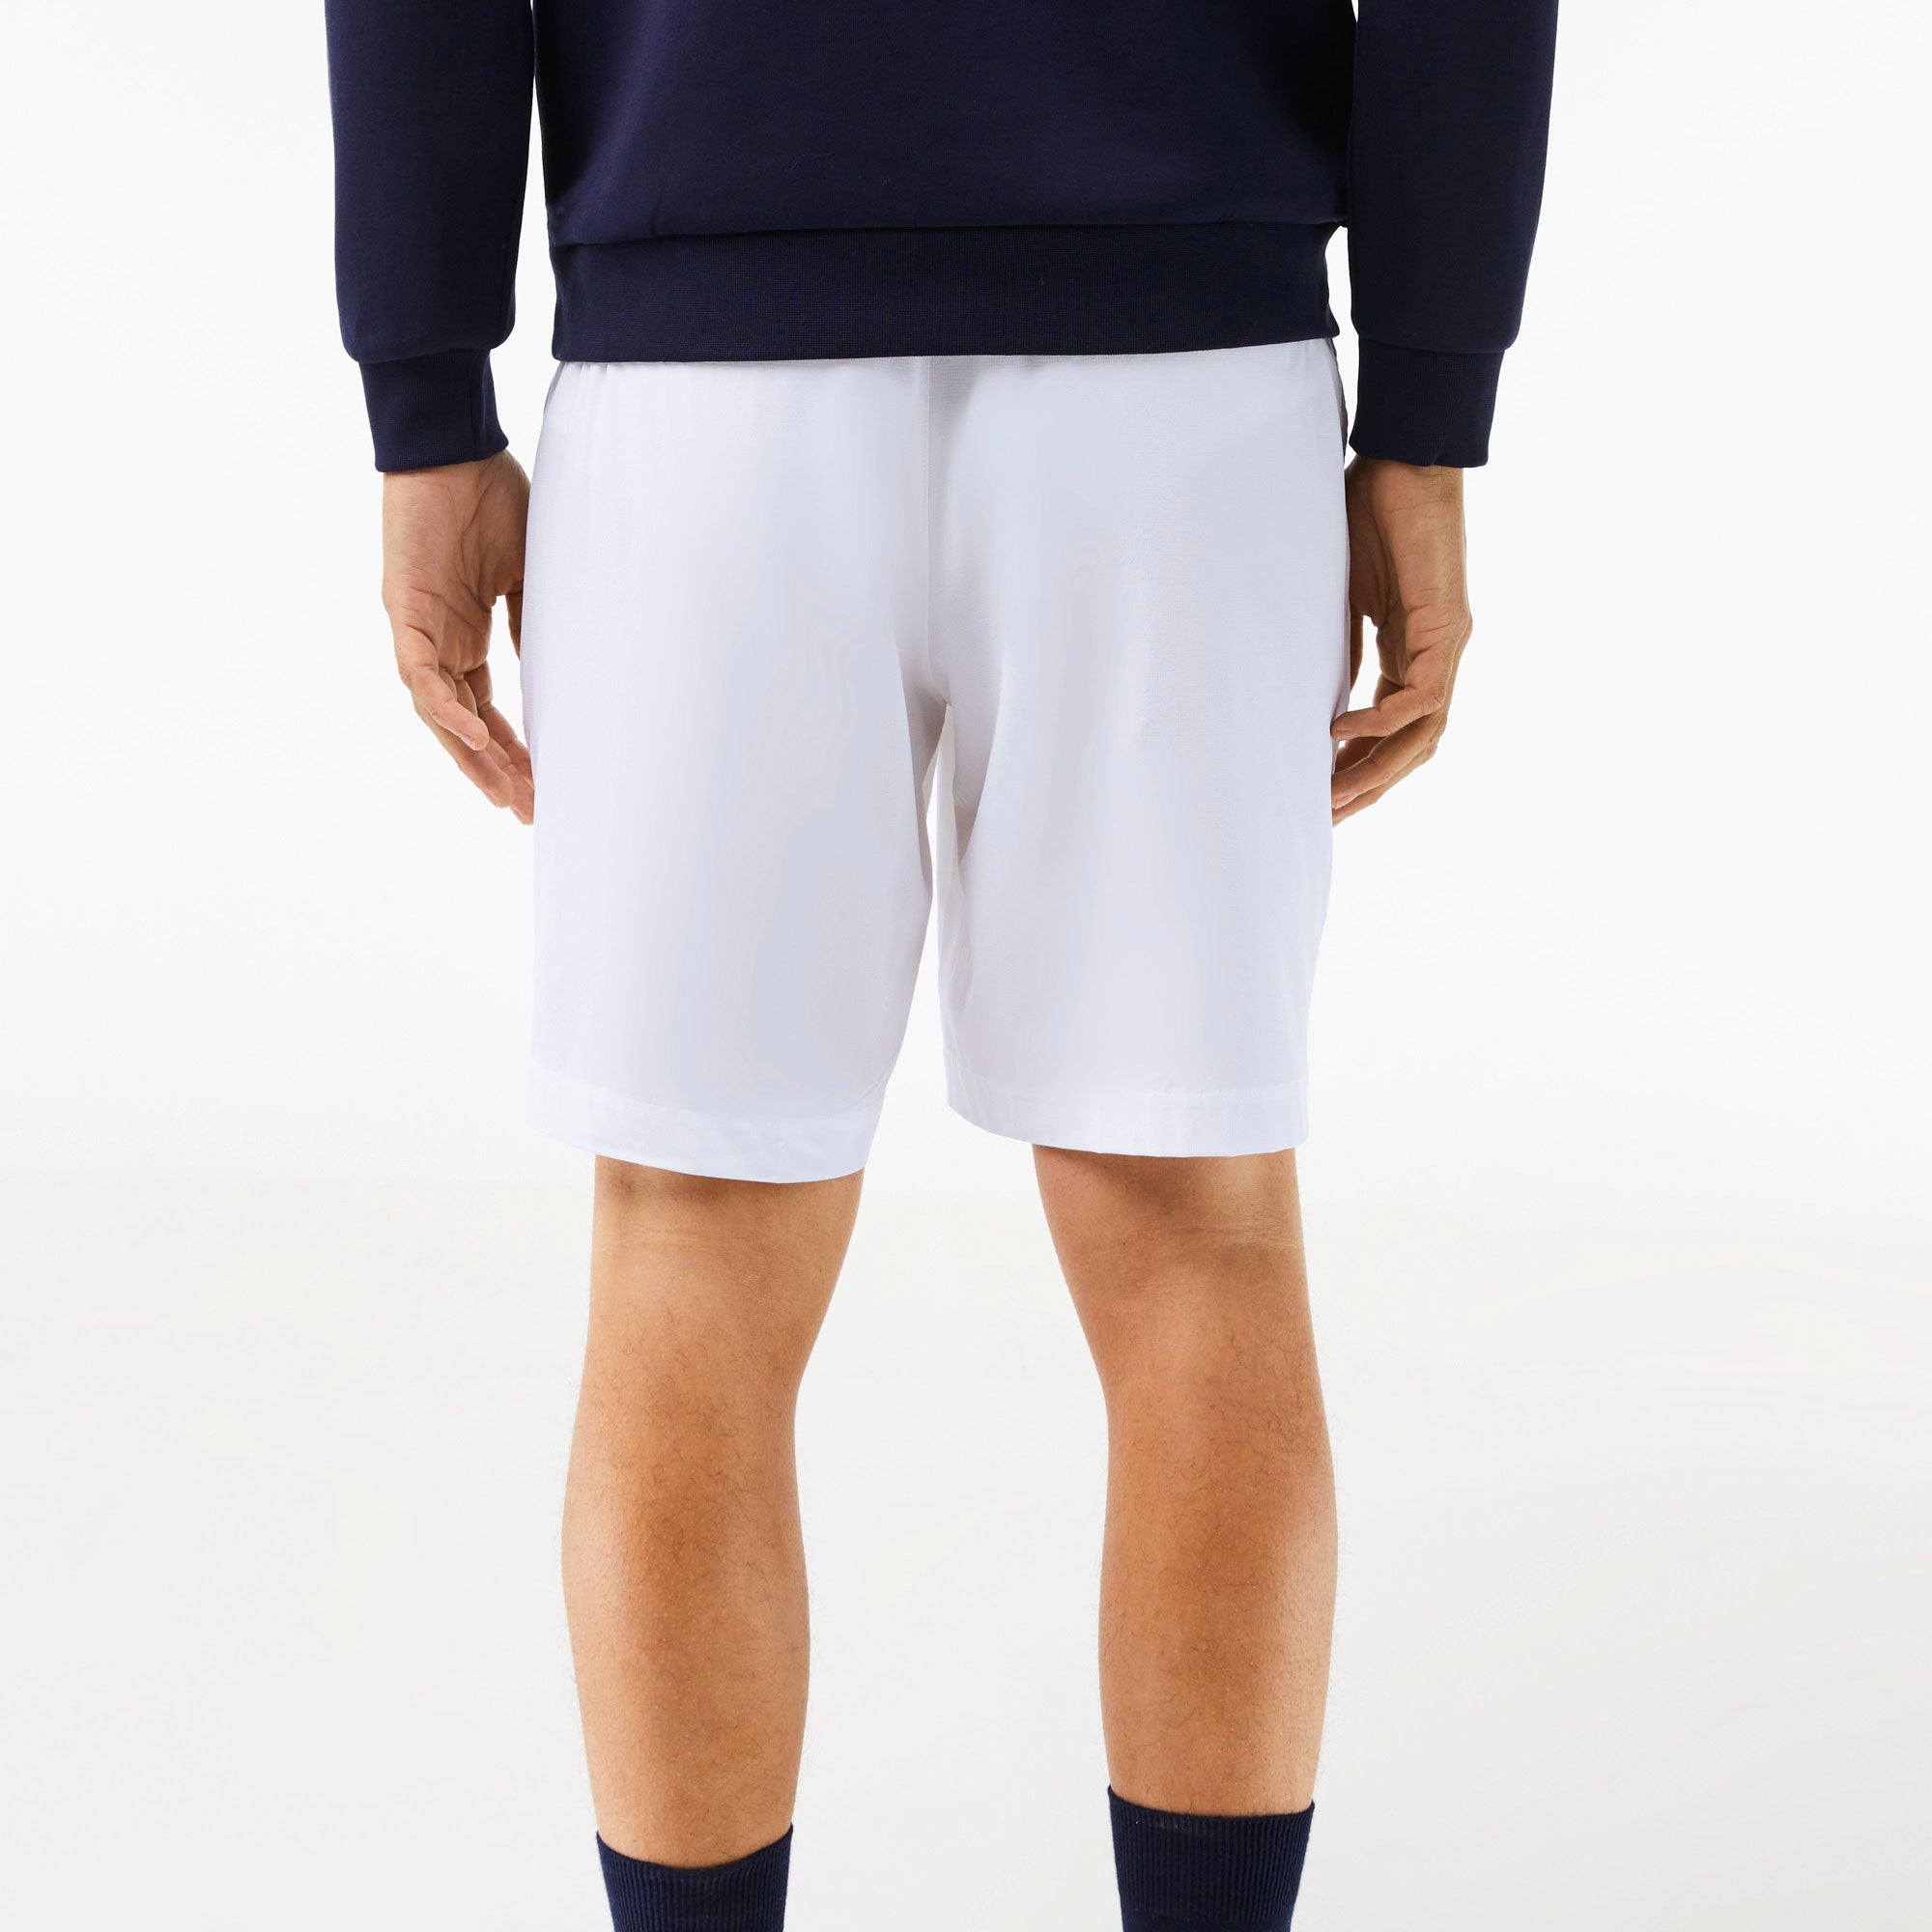 Lacoste Men's Woven Tennis Shorts White (2)